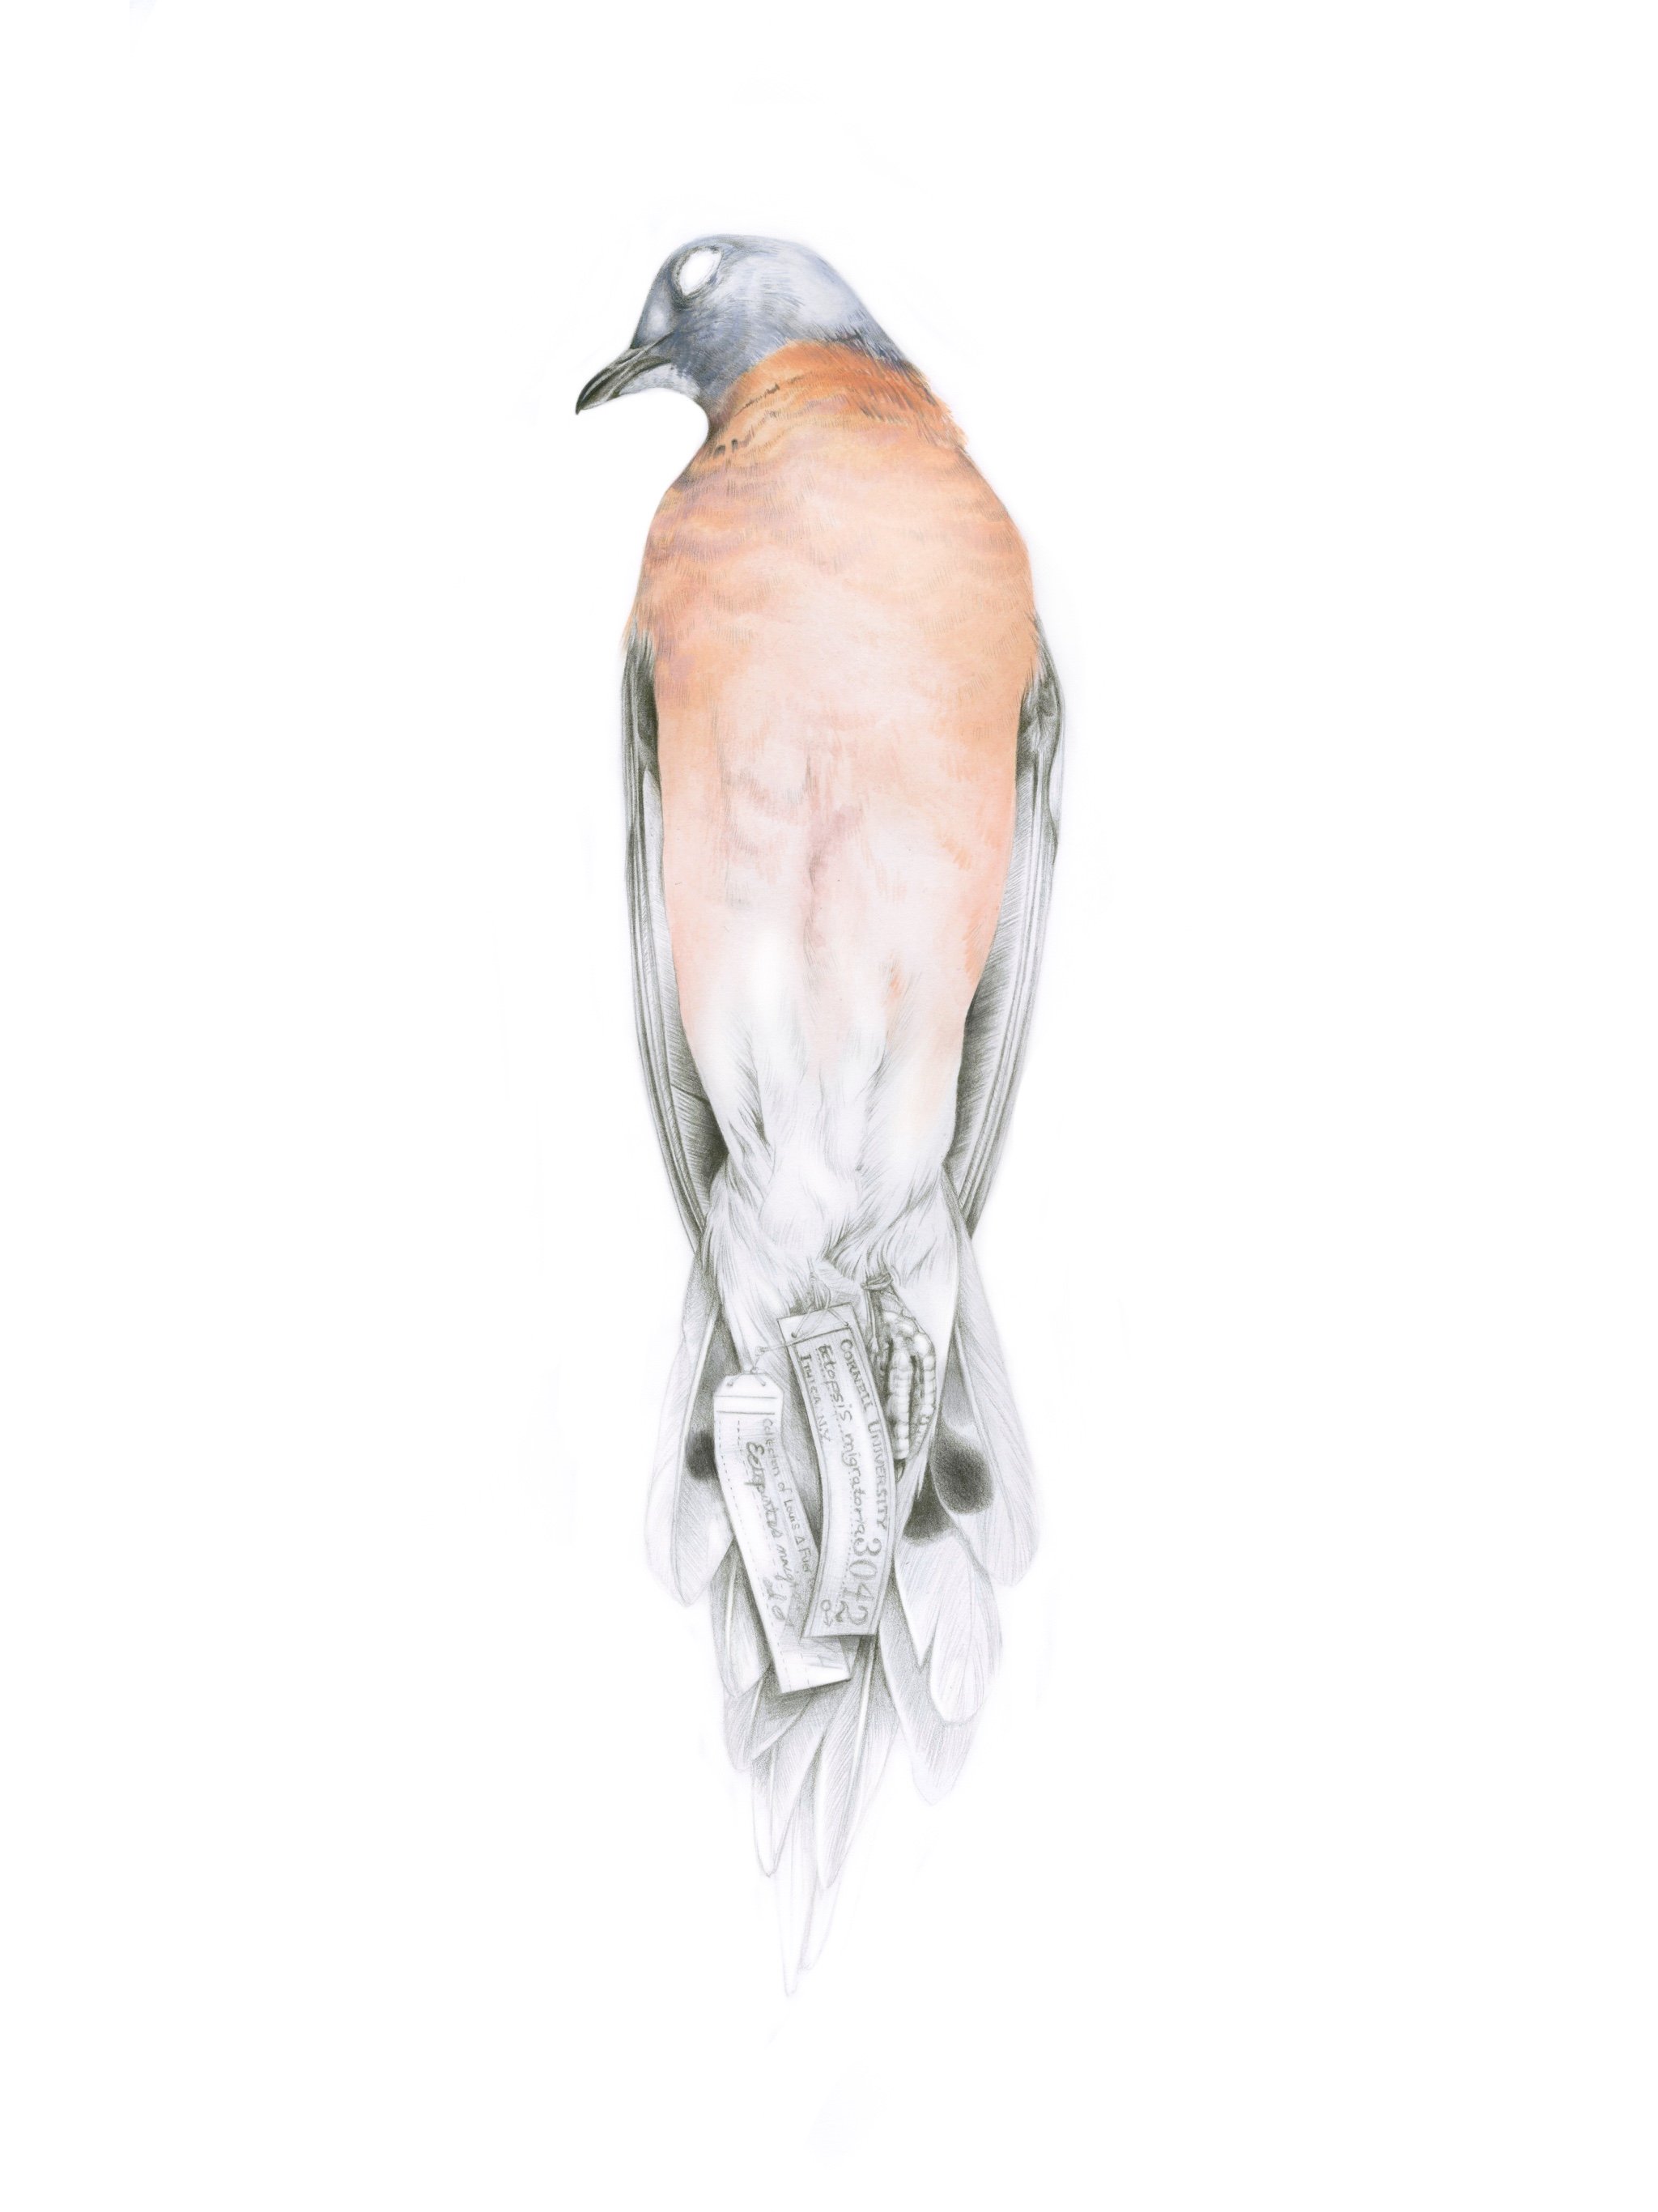 What Remains - Passenger Pigeon (Ectopistes migratorius)